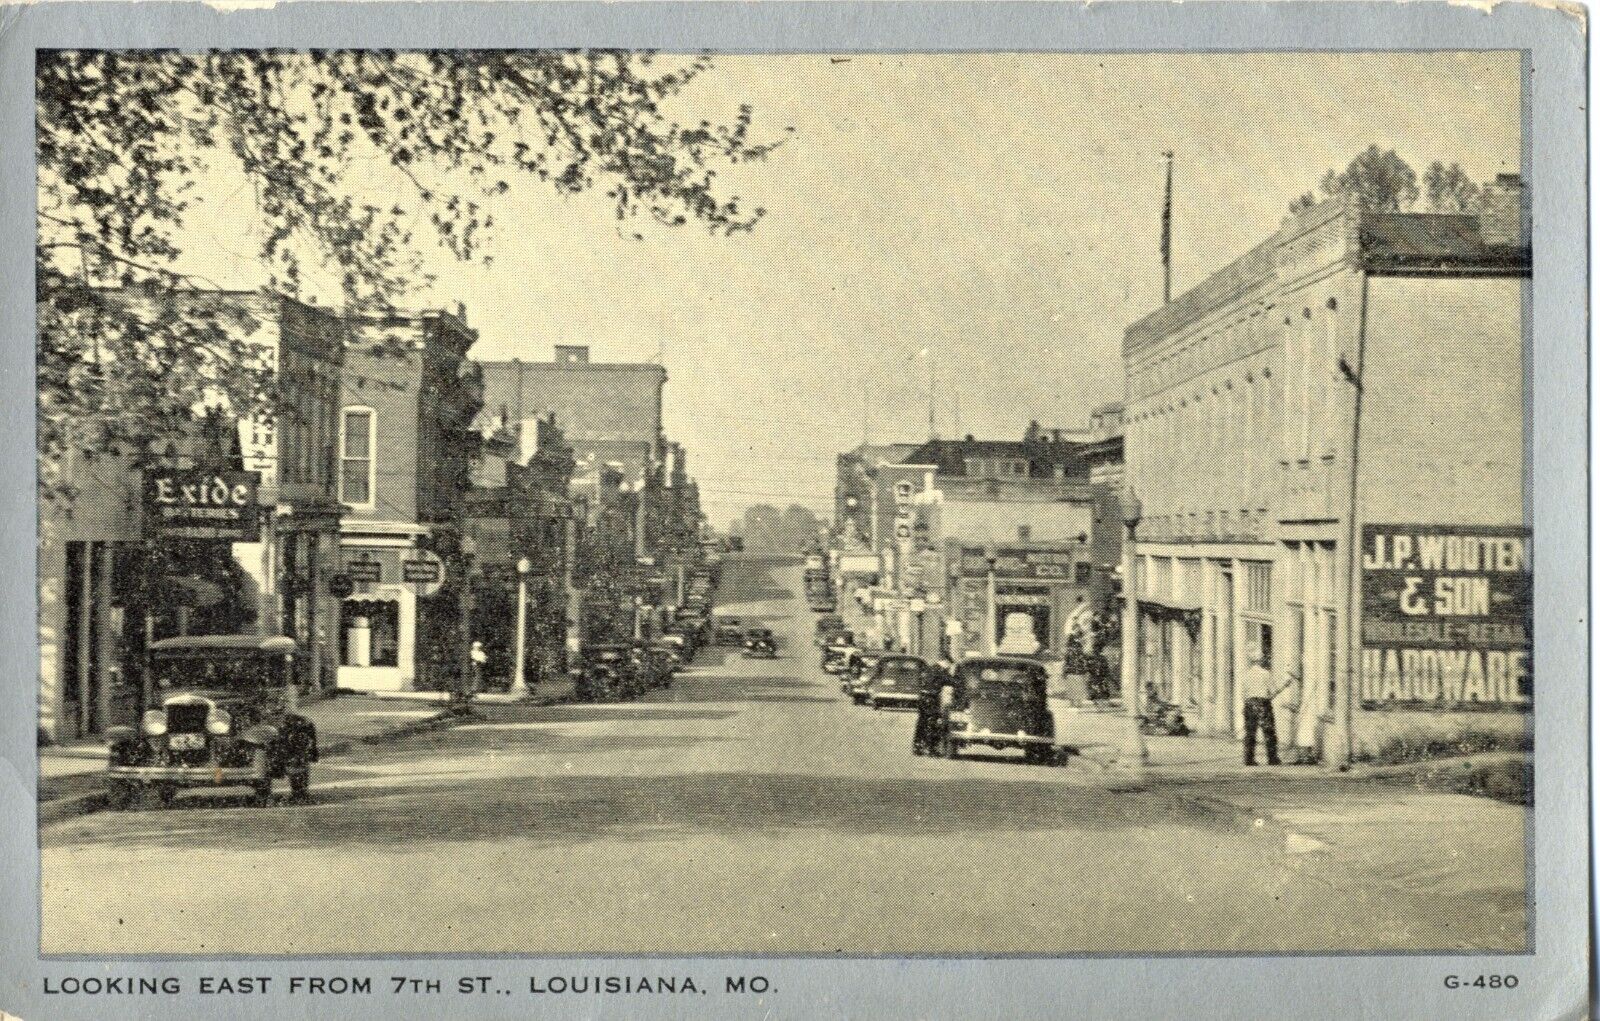 Looking East From 7th Street, Louisiana, Mo. Missouri Postcard #G-480